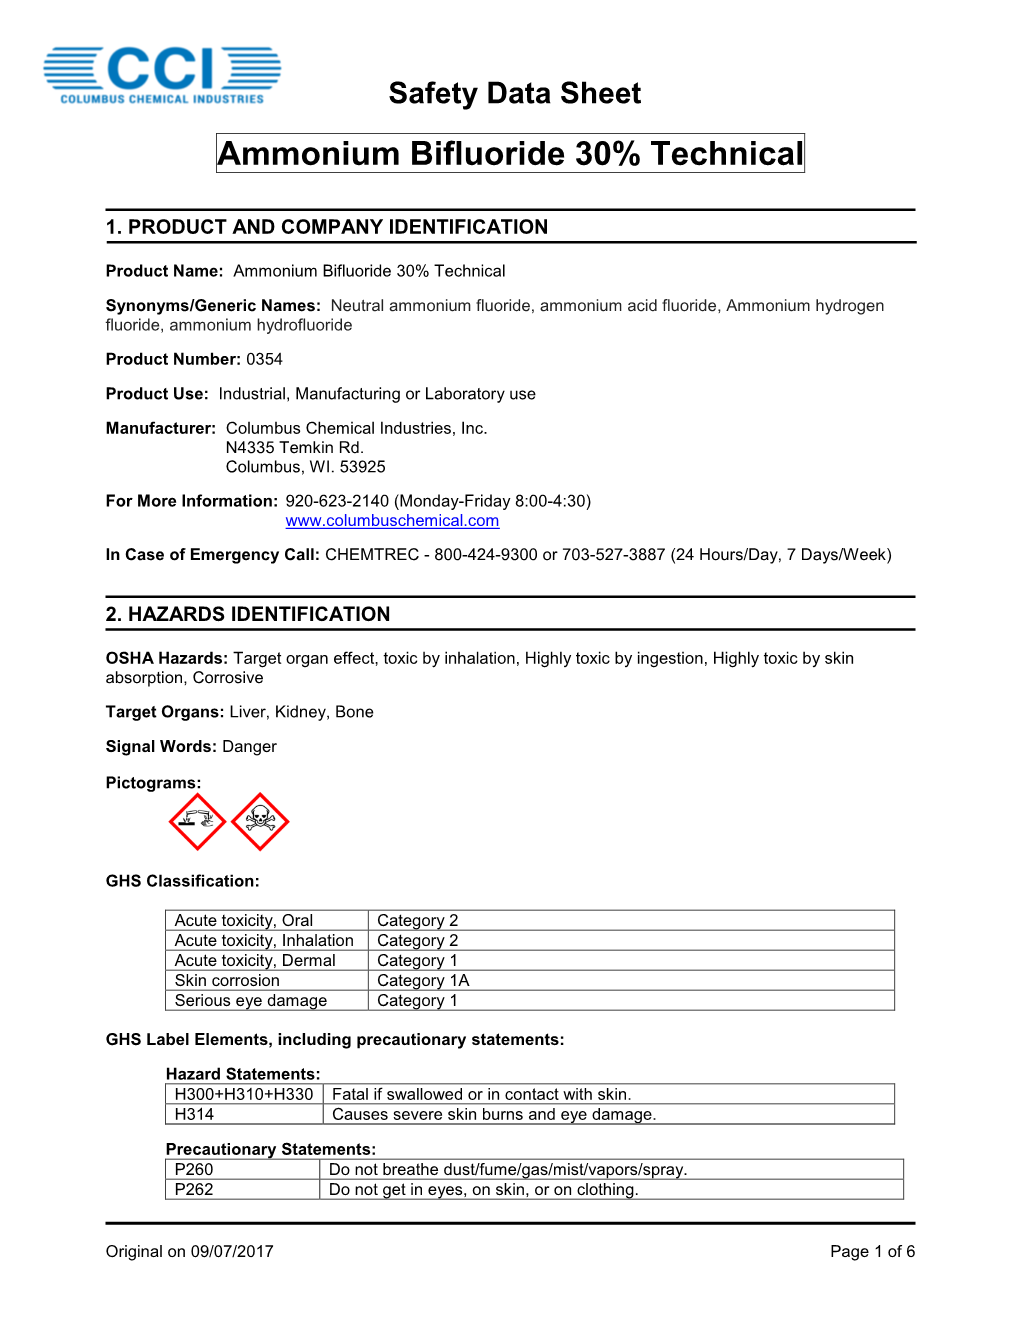 Ammonium Bifluoride 30% Technical